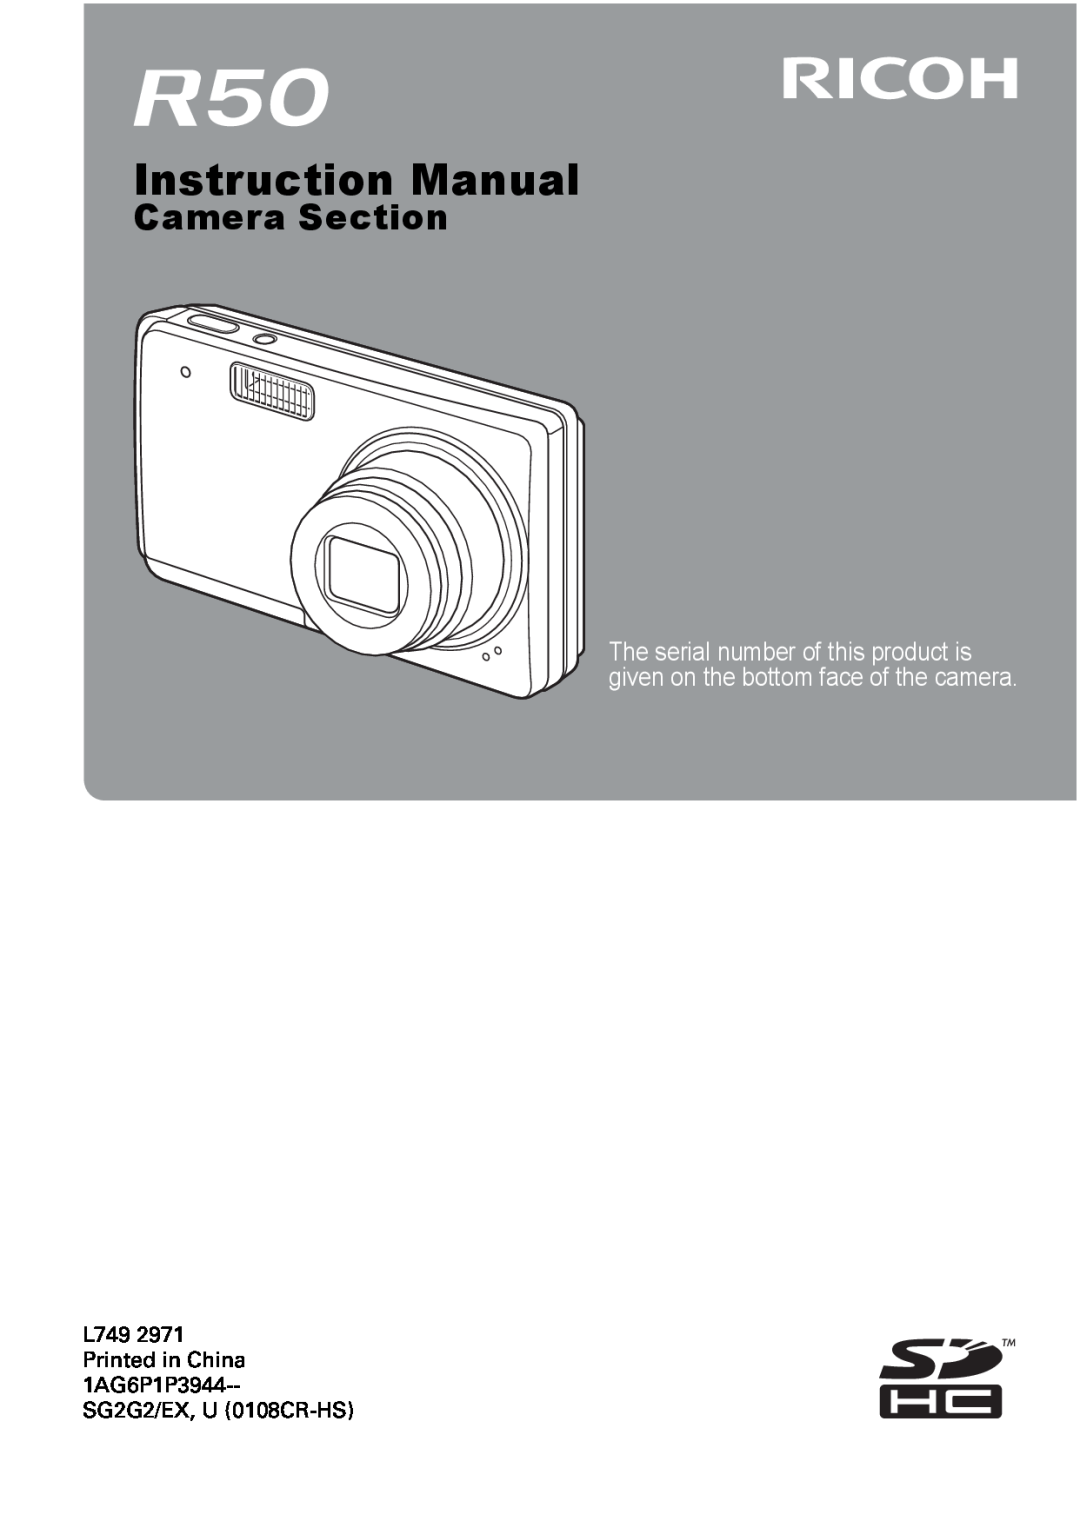 Samsung R50 instruction manual Camera Section, Instruction Manual 